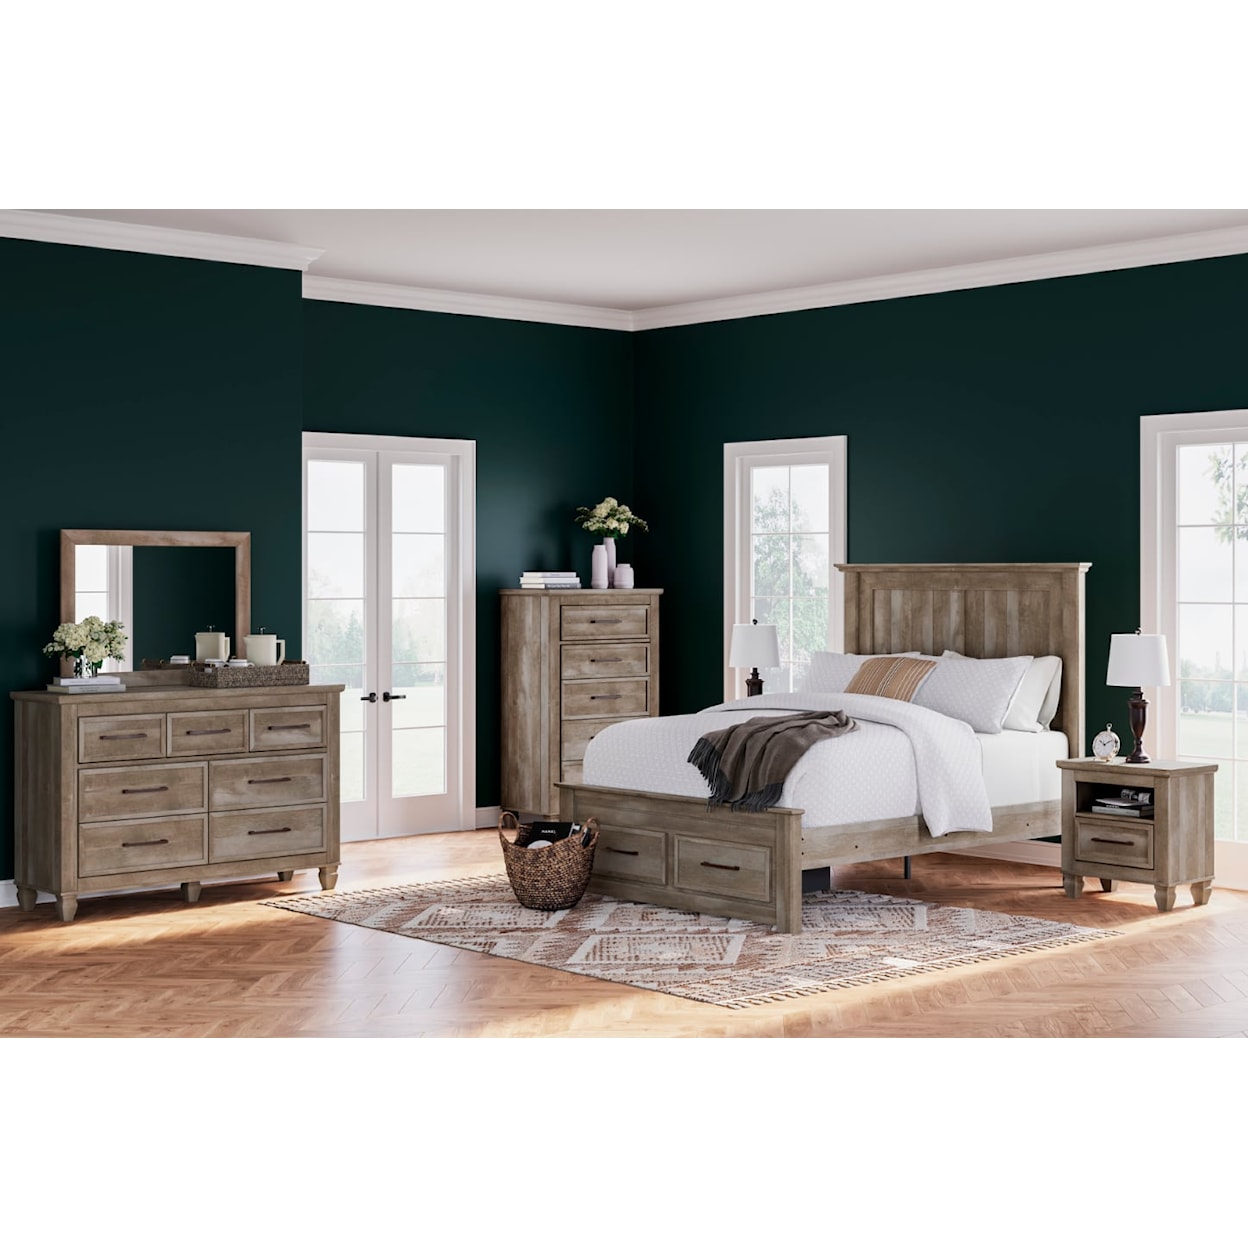 Ashley Furniture Signature Design Yarbeck Queen Bedroom Set